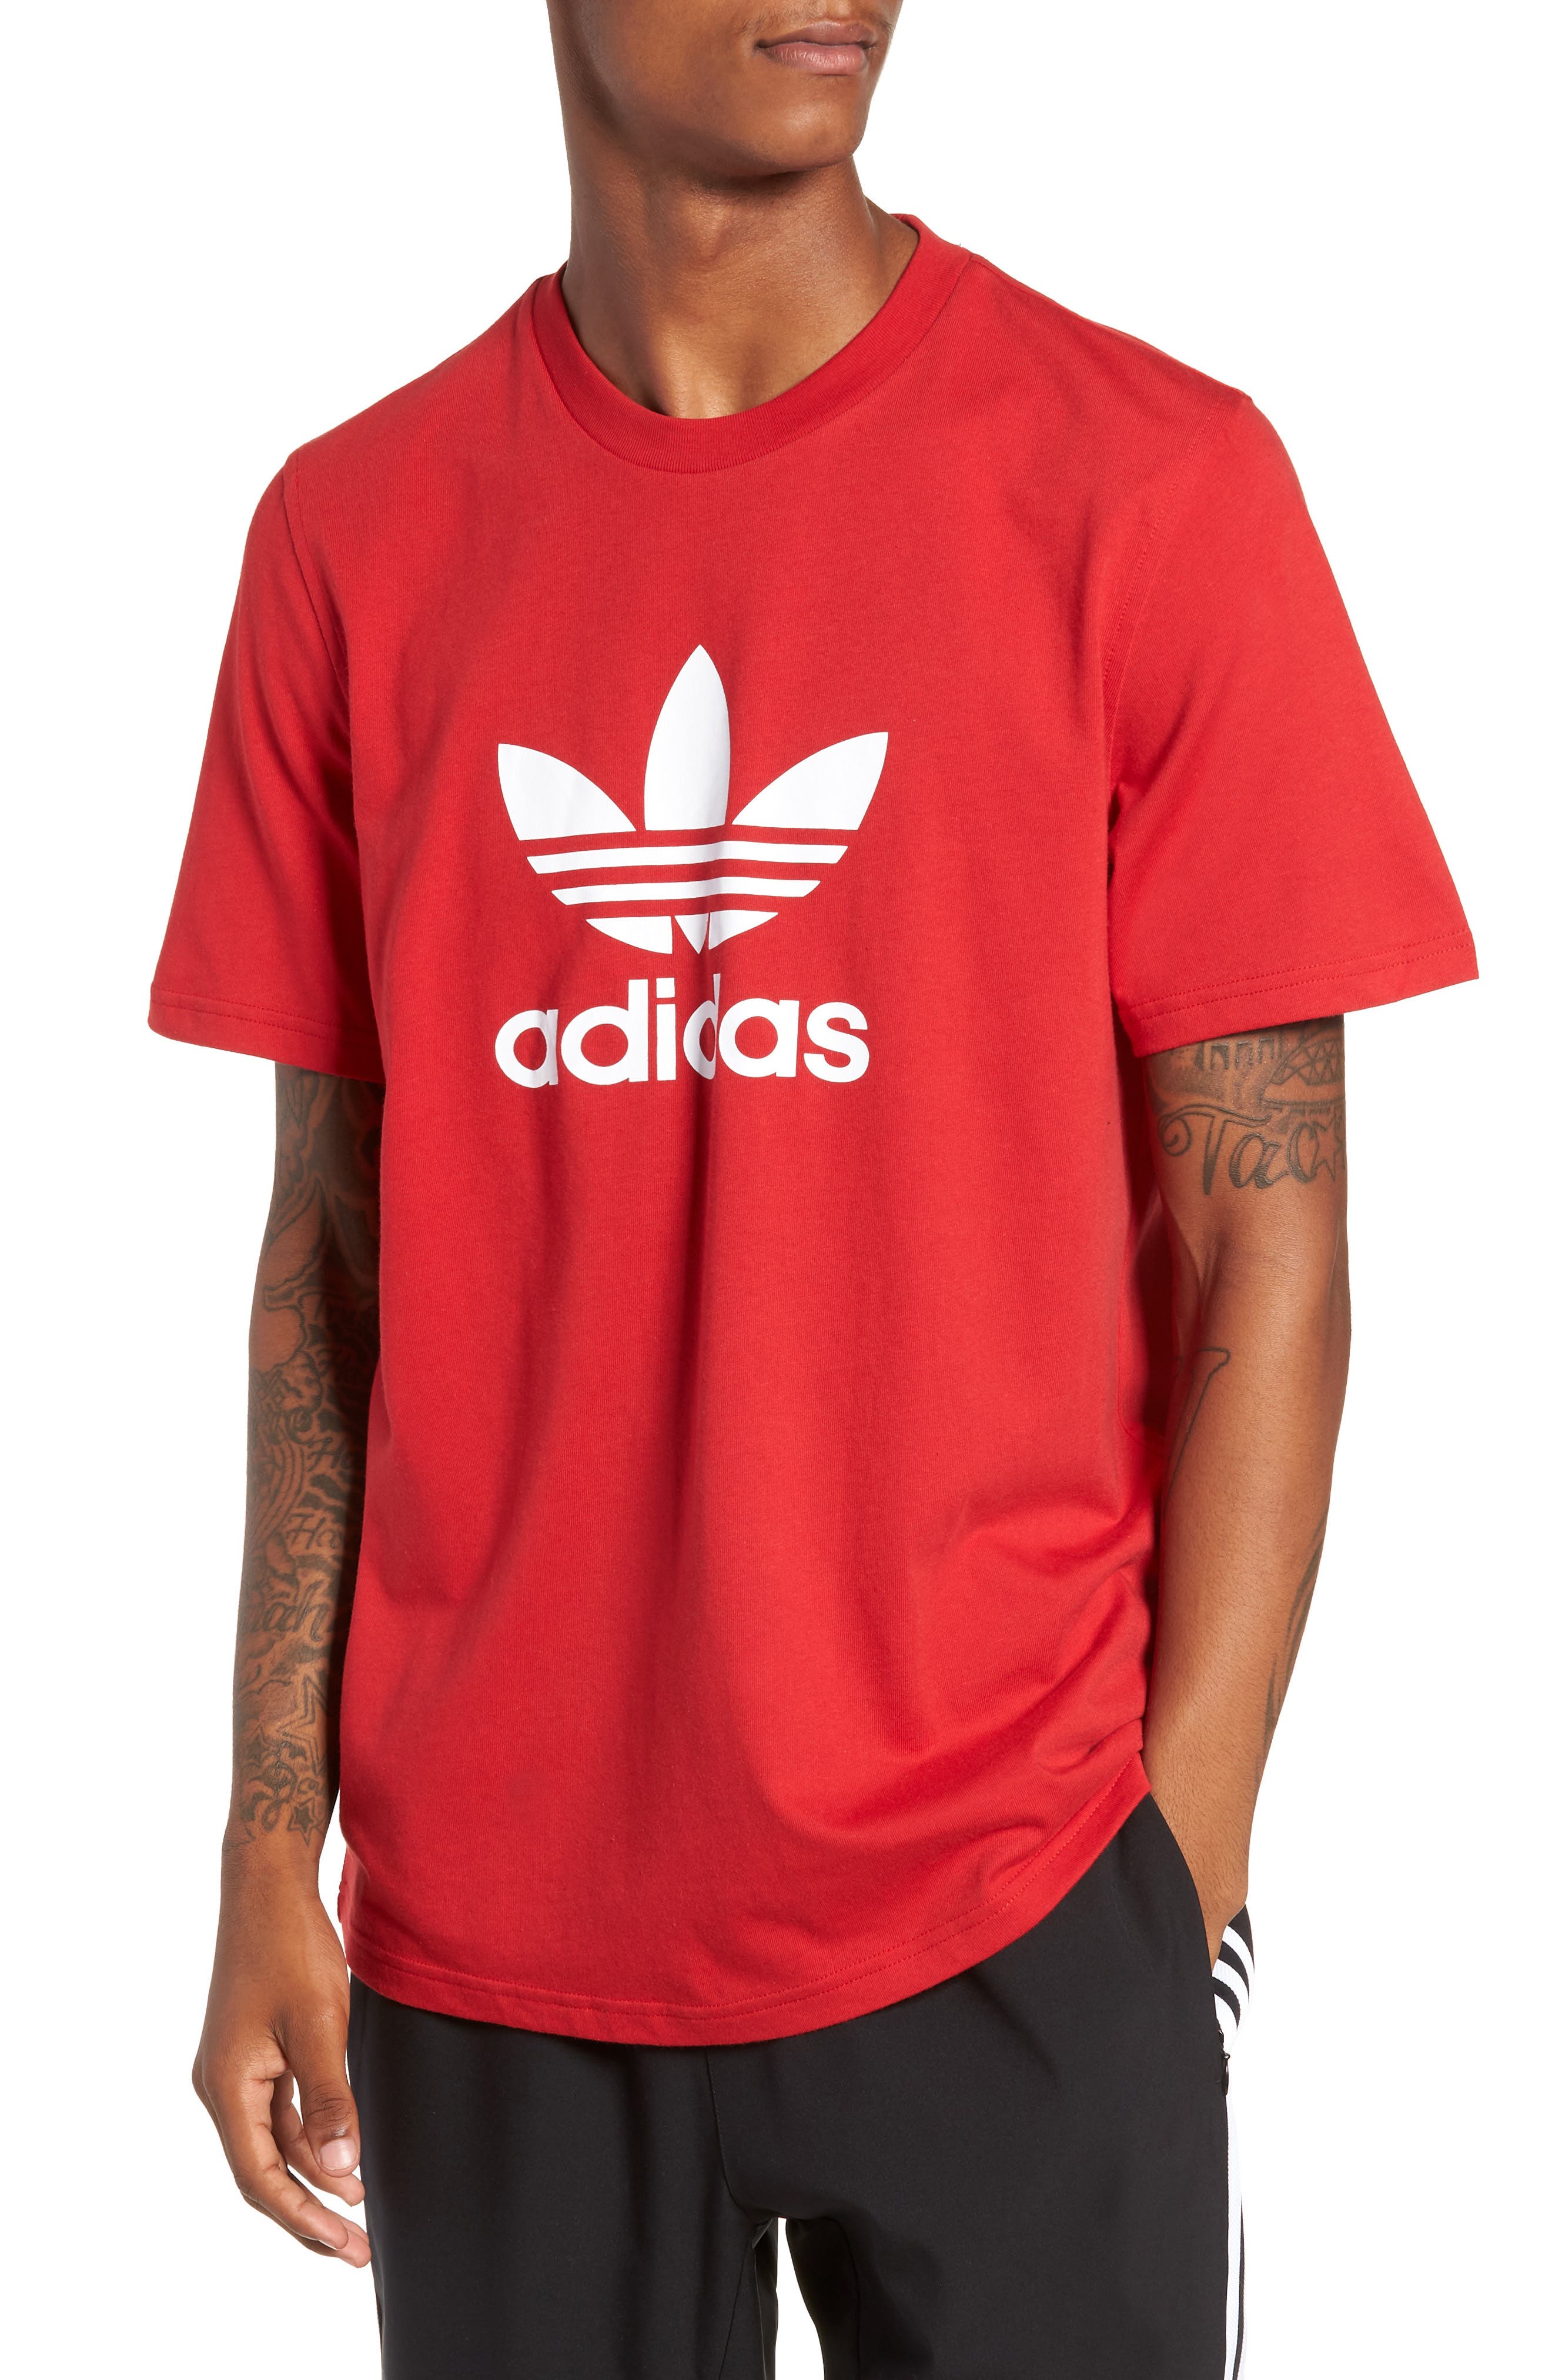 UPC 192609980767 product image for Men's Adidas Originals Trefoil Graphic T-Shirt, Size X-Large - Red | upcitemdb.com